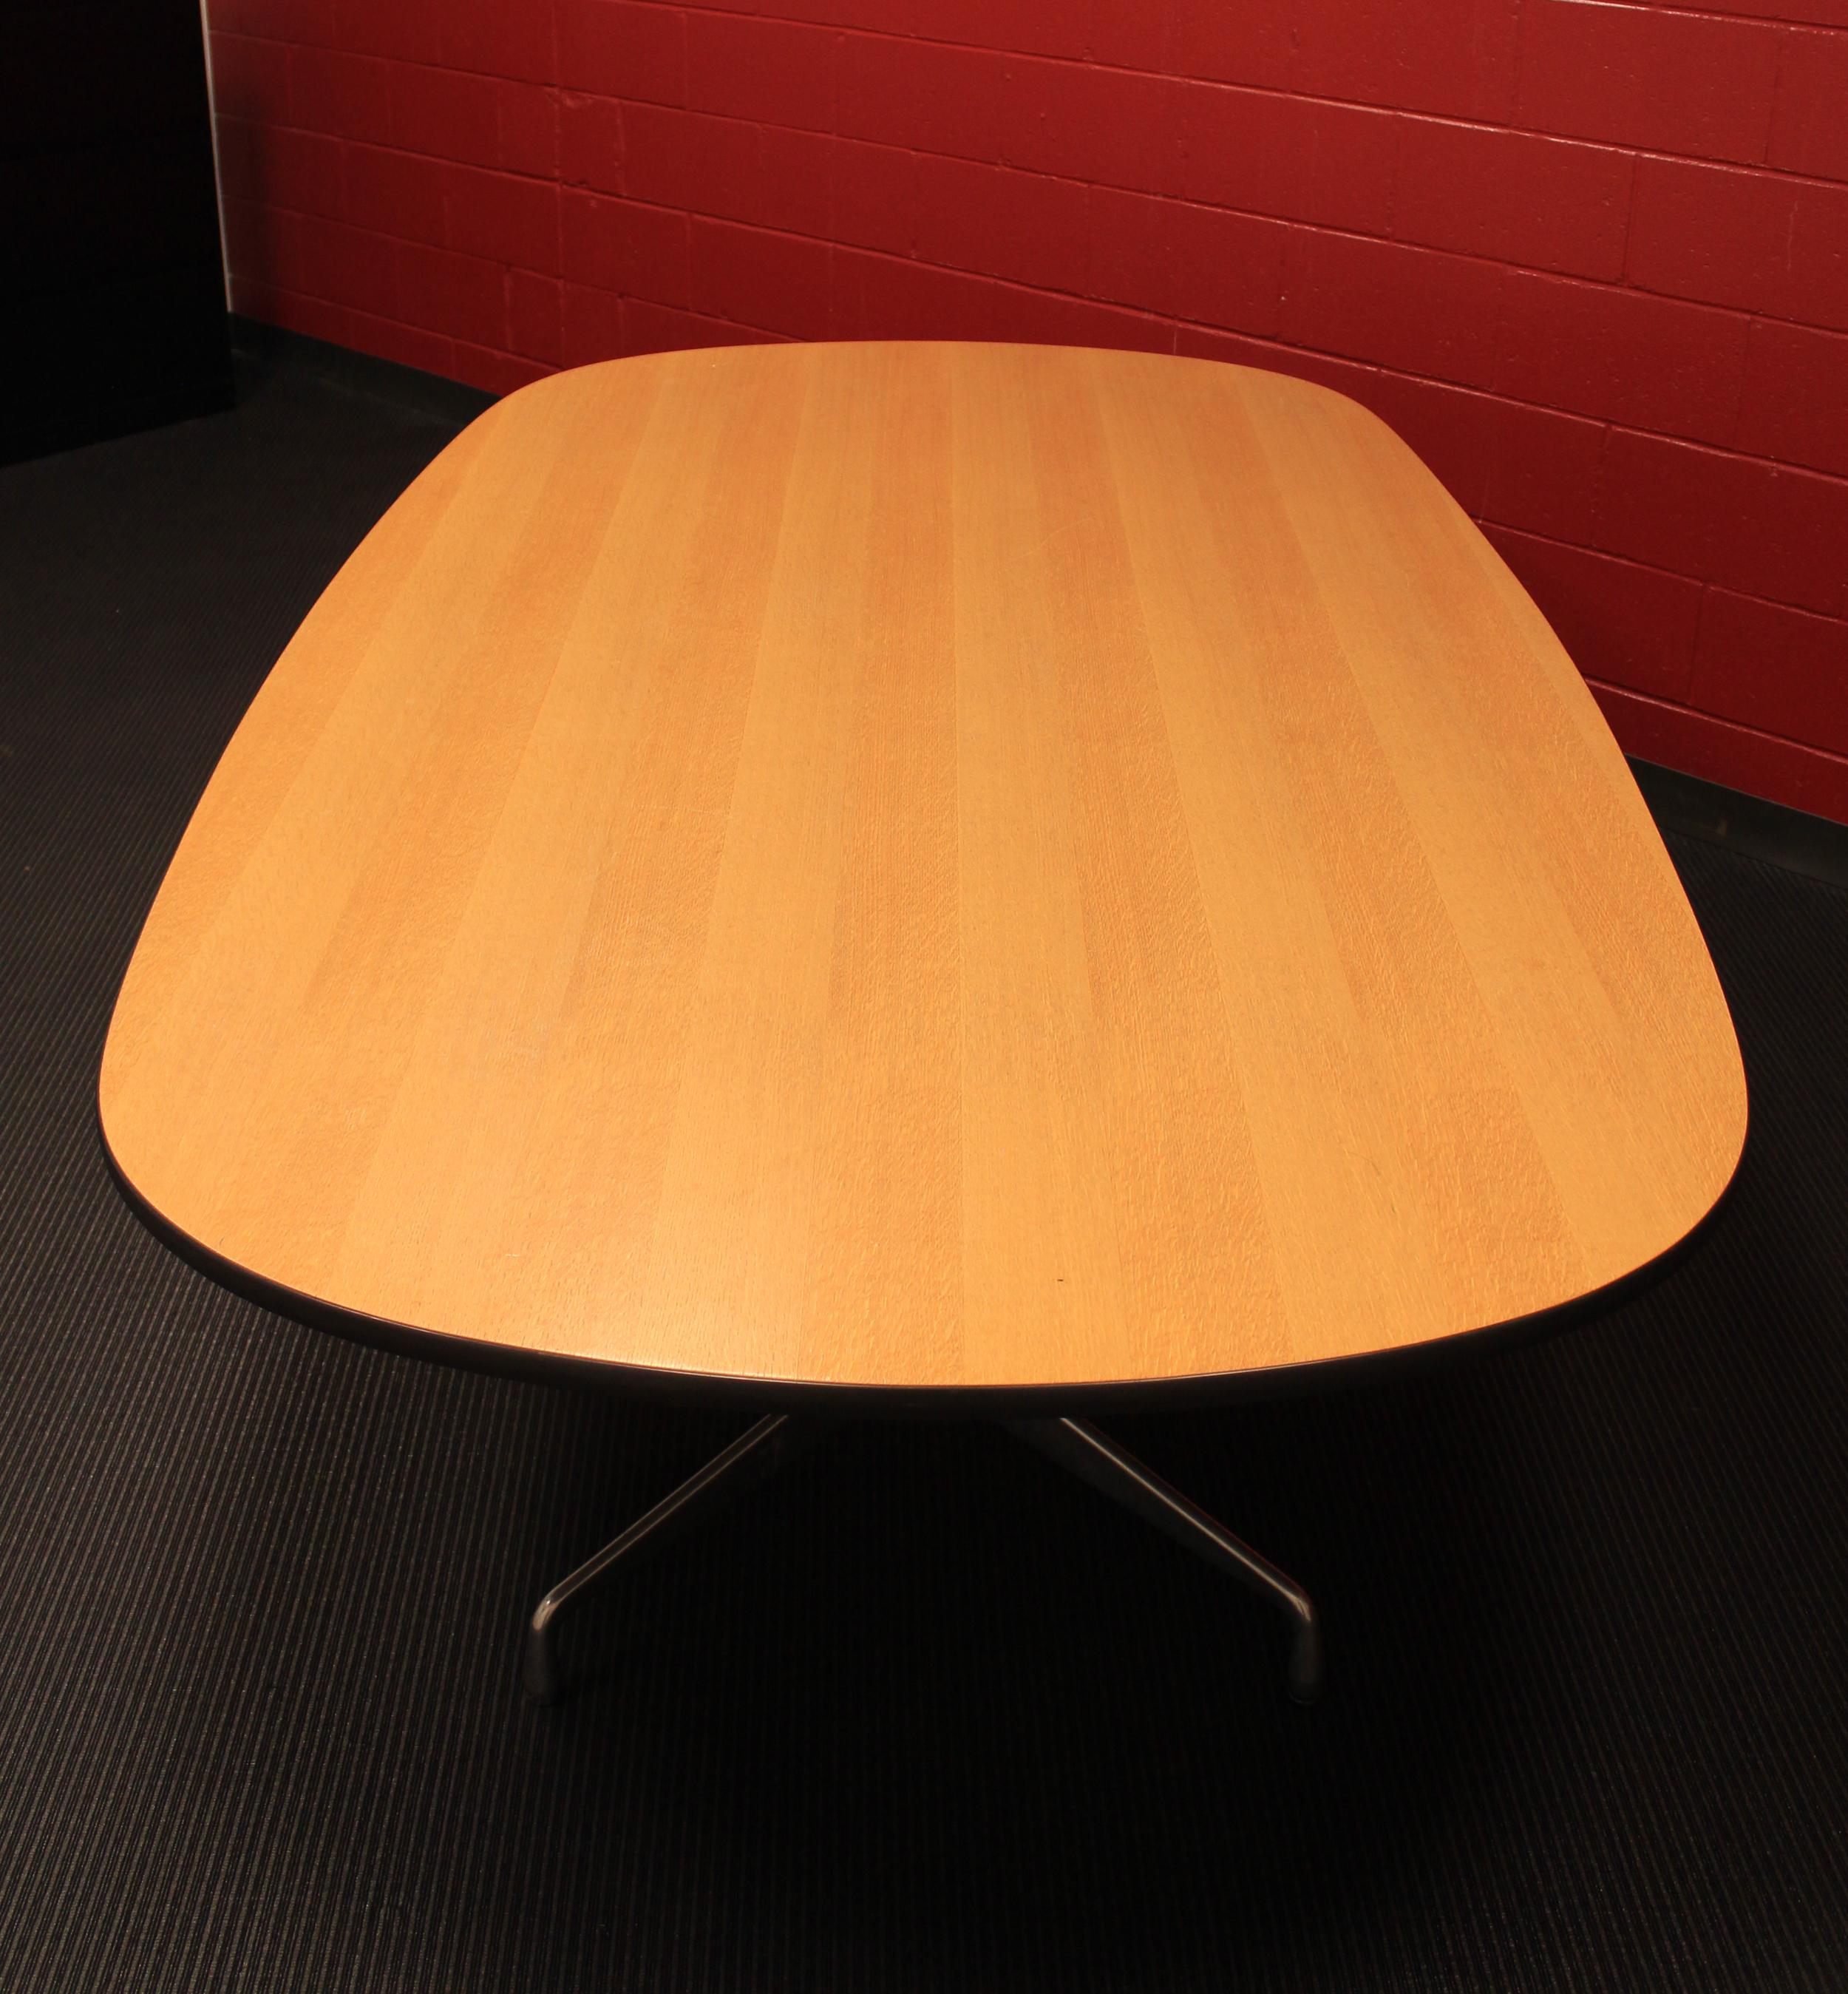 Fin du 20e siècle Très grande table de conférence Charles & Ray Eames for Herman Miller 8' Conference Dining Table Oak en vente